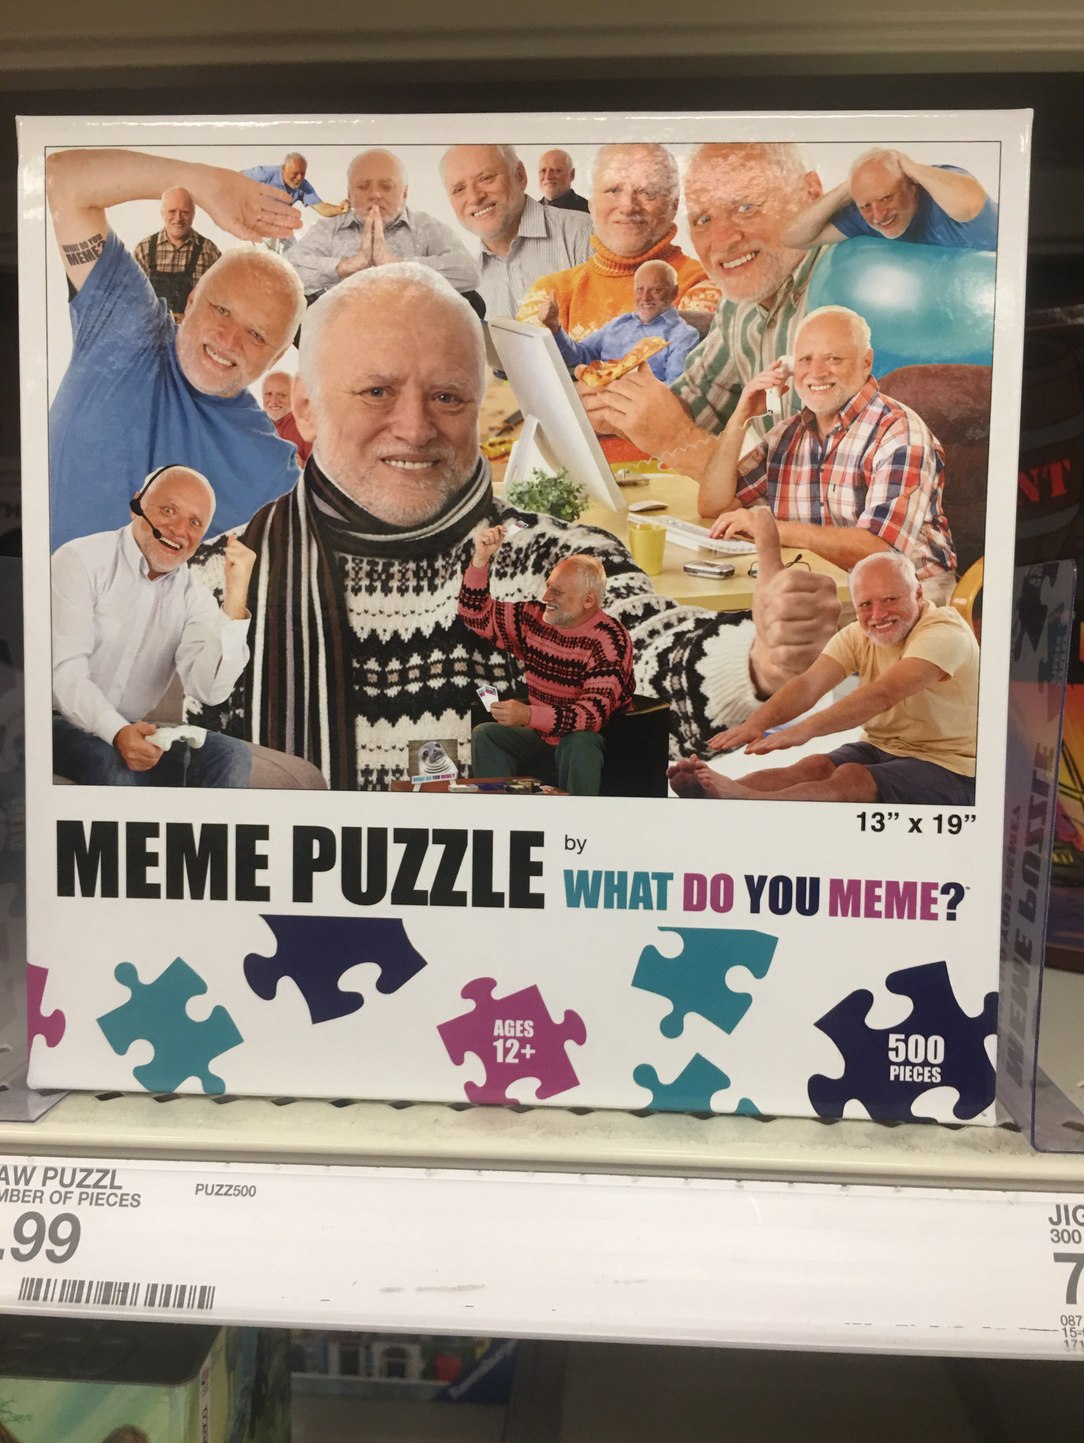 this puzzle brings be pjaoiyn - meme